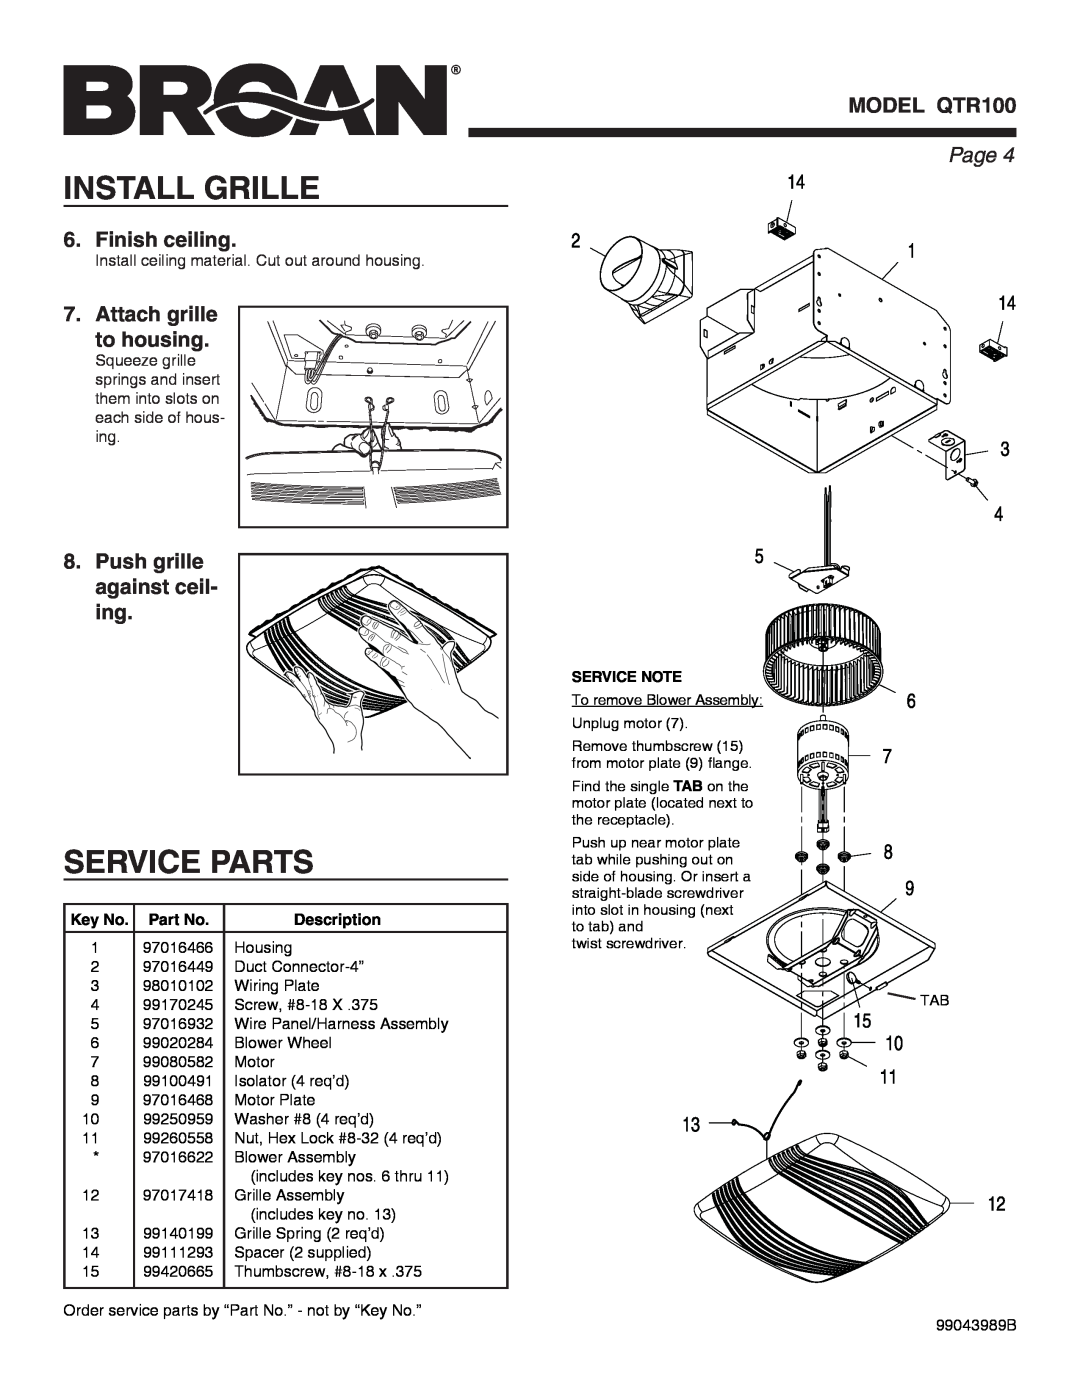 Broan QTR100 warranty Install Grille, Service Parts, Page , Description 